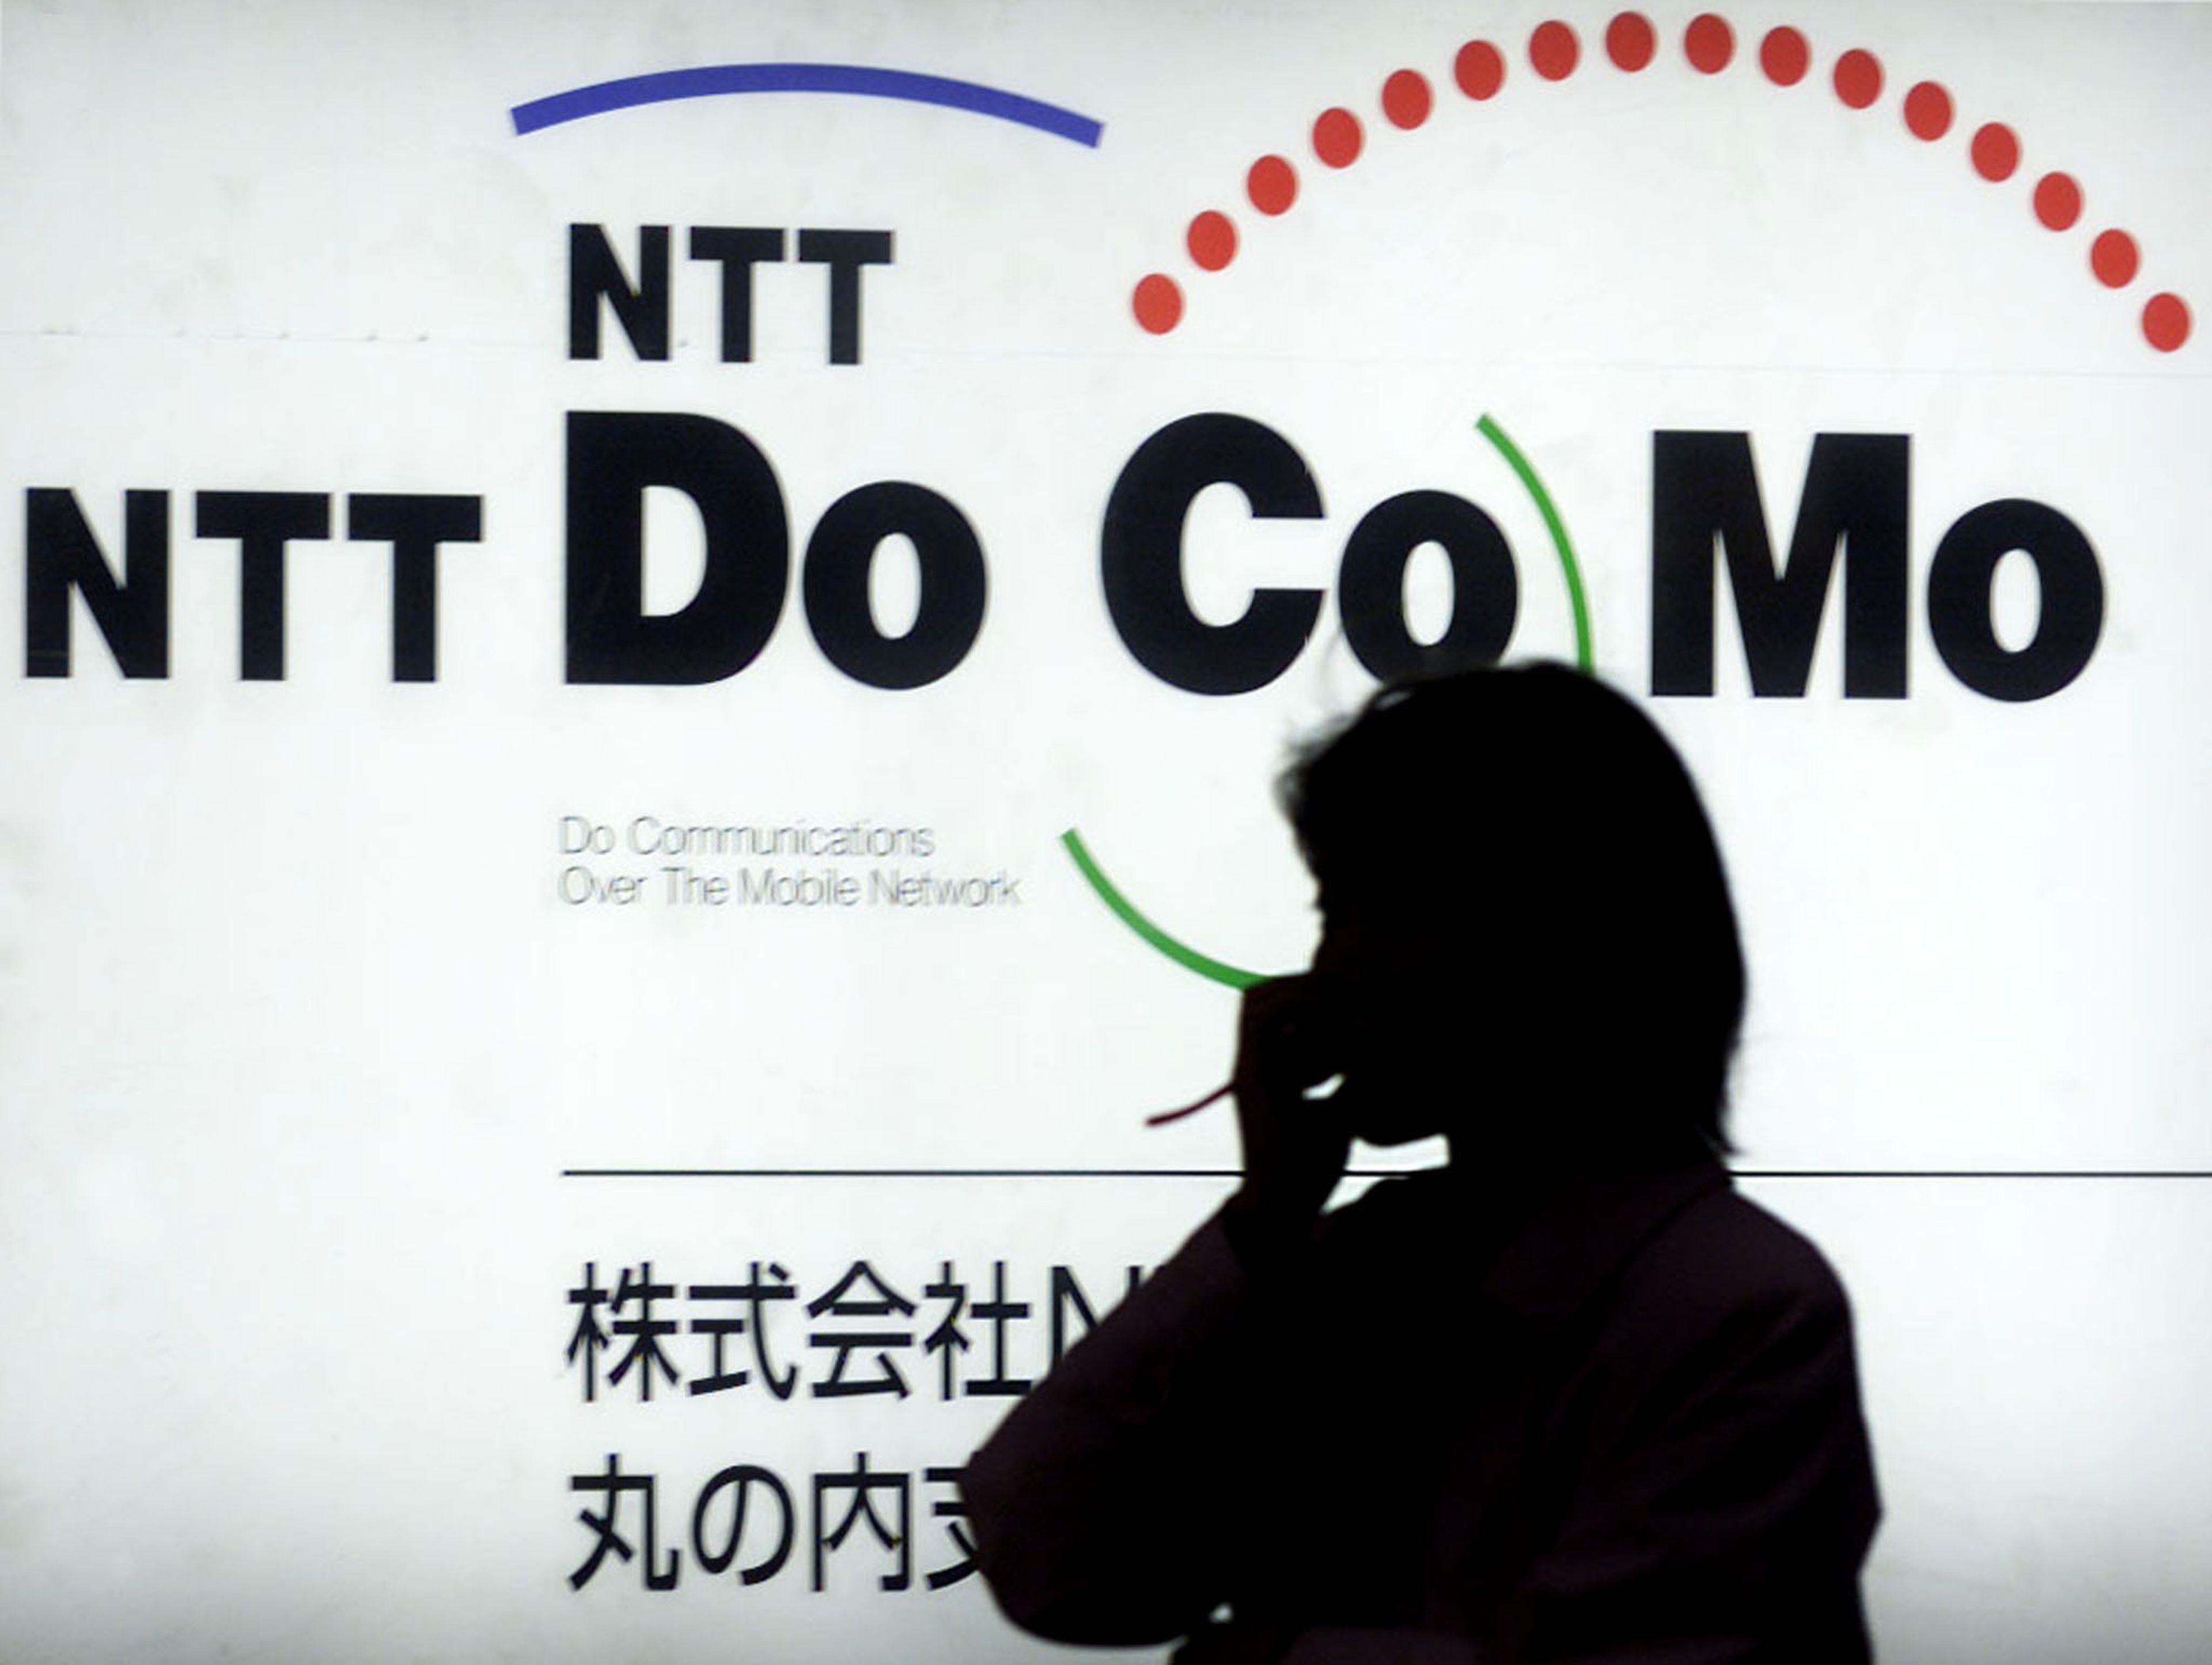 Compañía NTT tecnologías de la comunicación